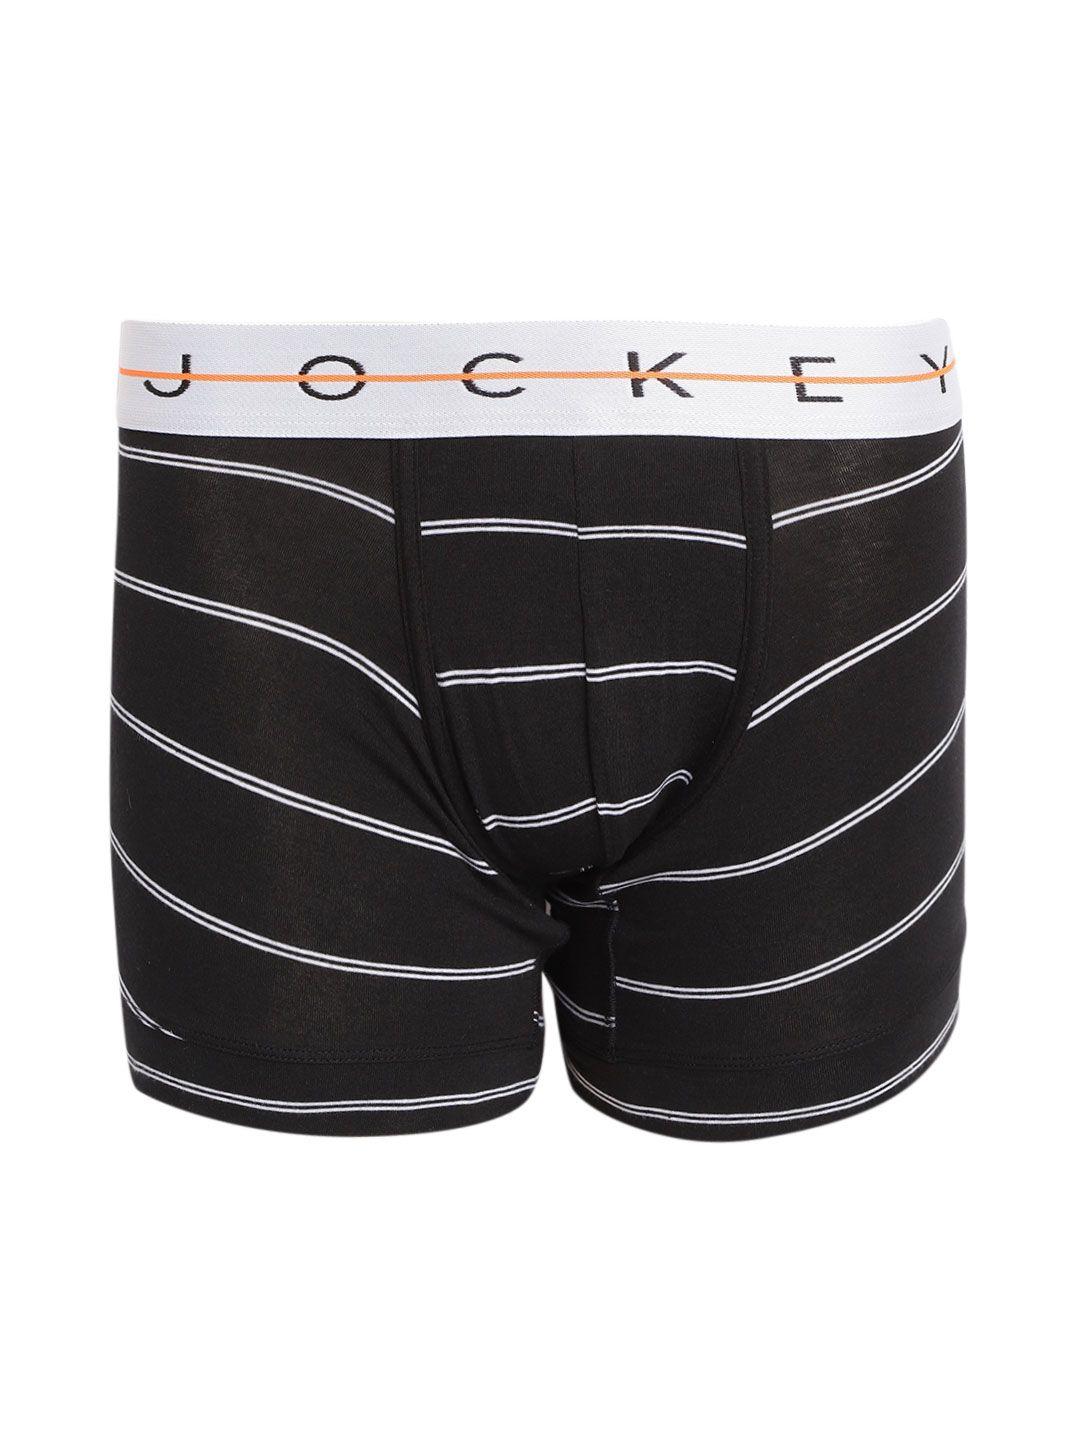 jockey men black & white striped pure cotton trunk ny02-0105-whblo